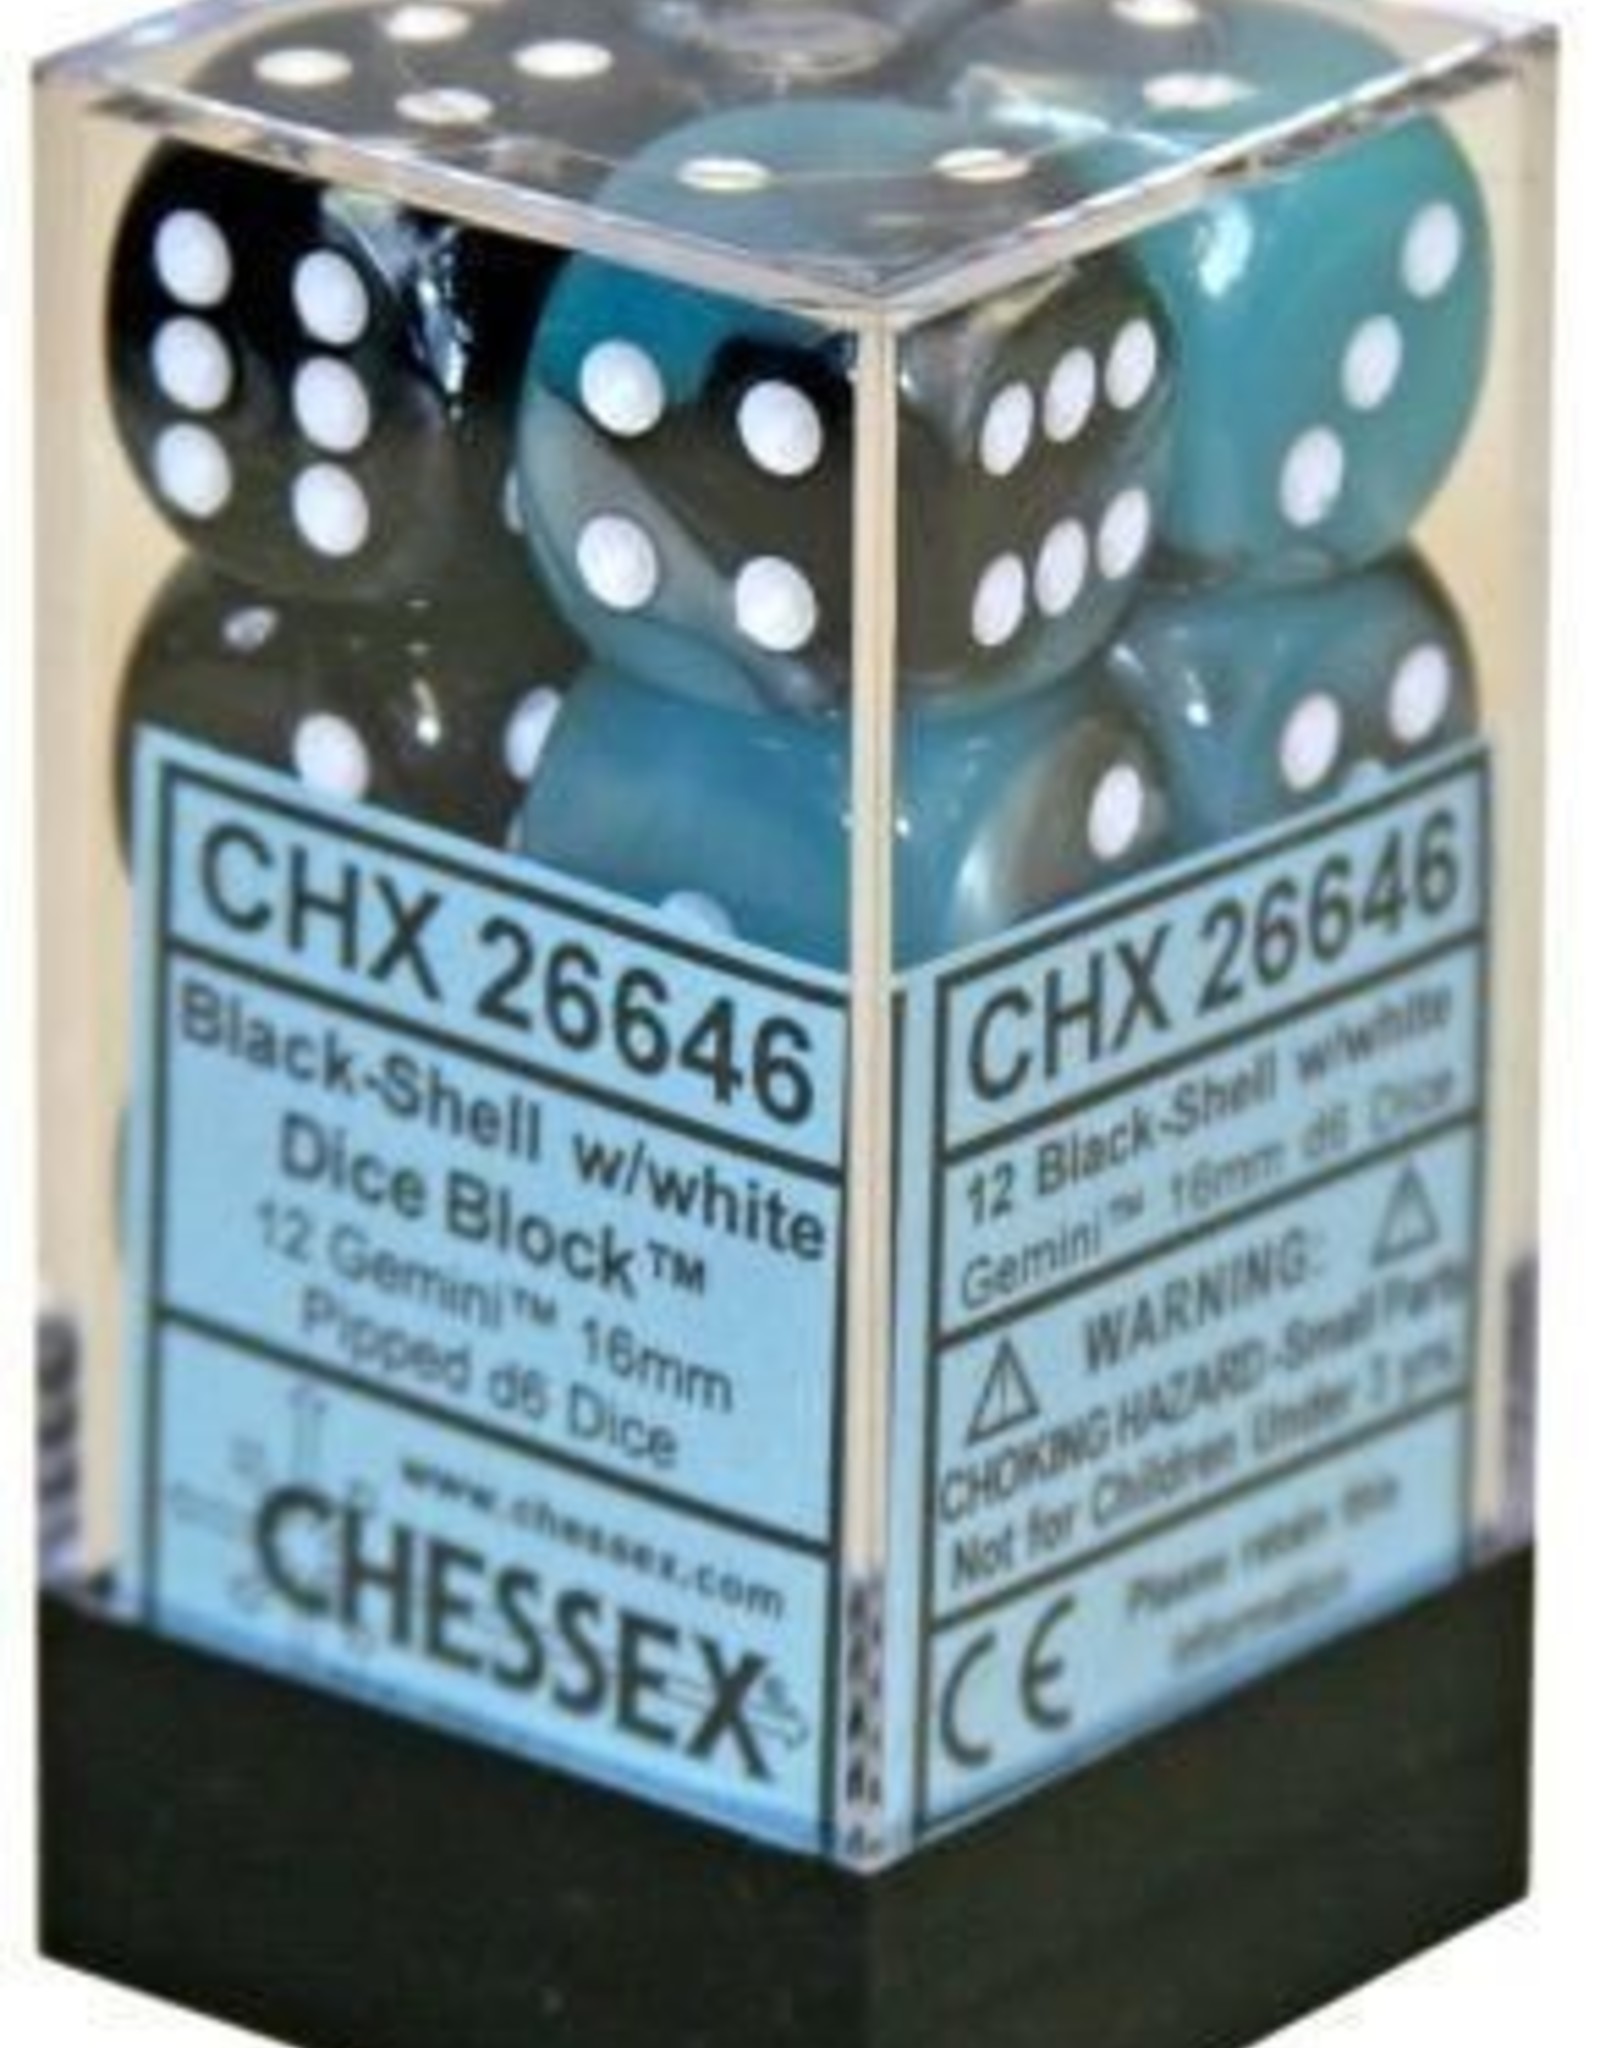 Chessex 16MM D6 Dice Set CHX26646 Gemini Black Shell/White